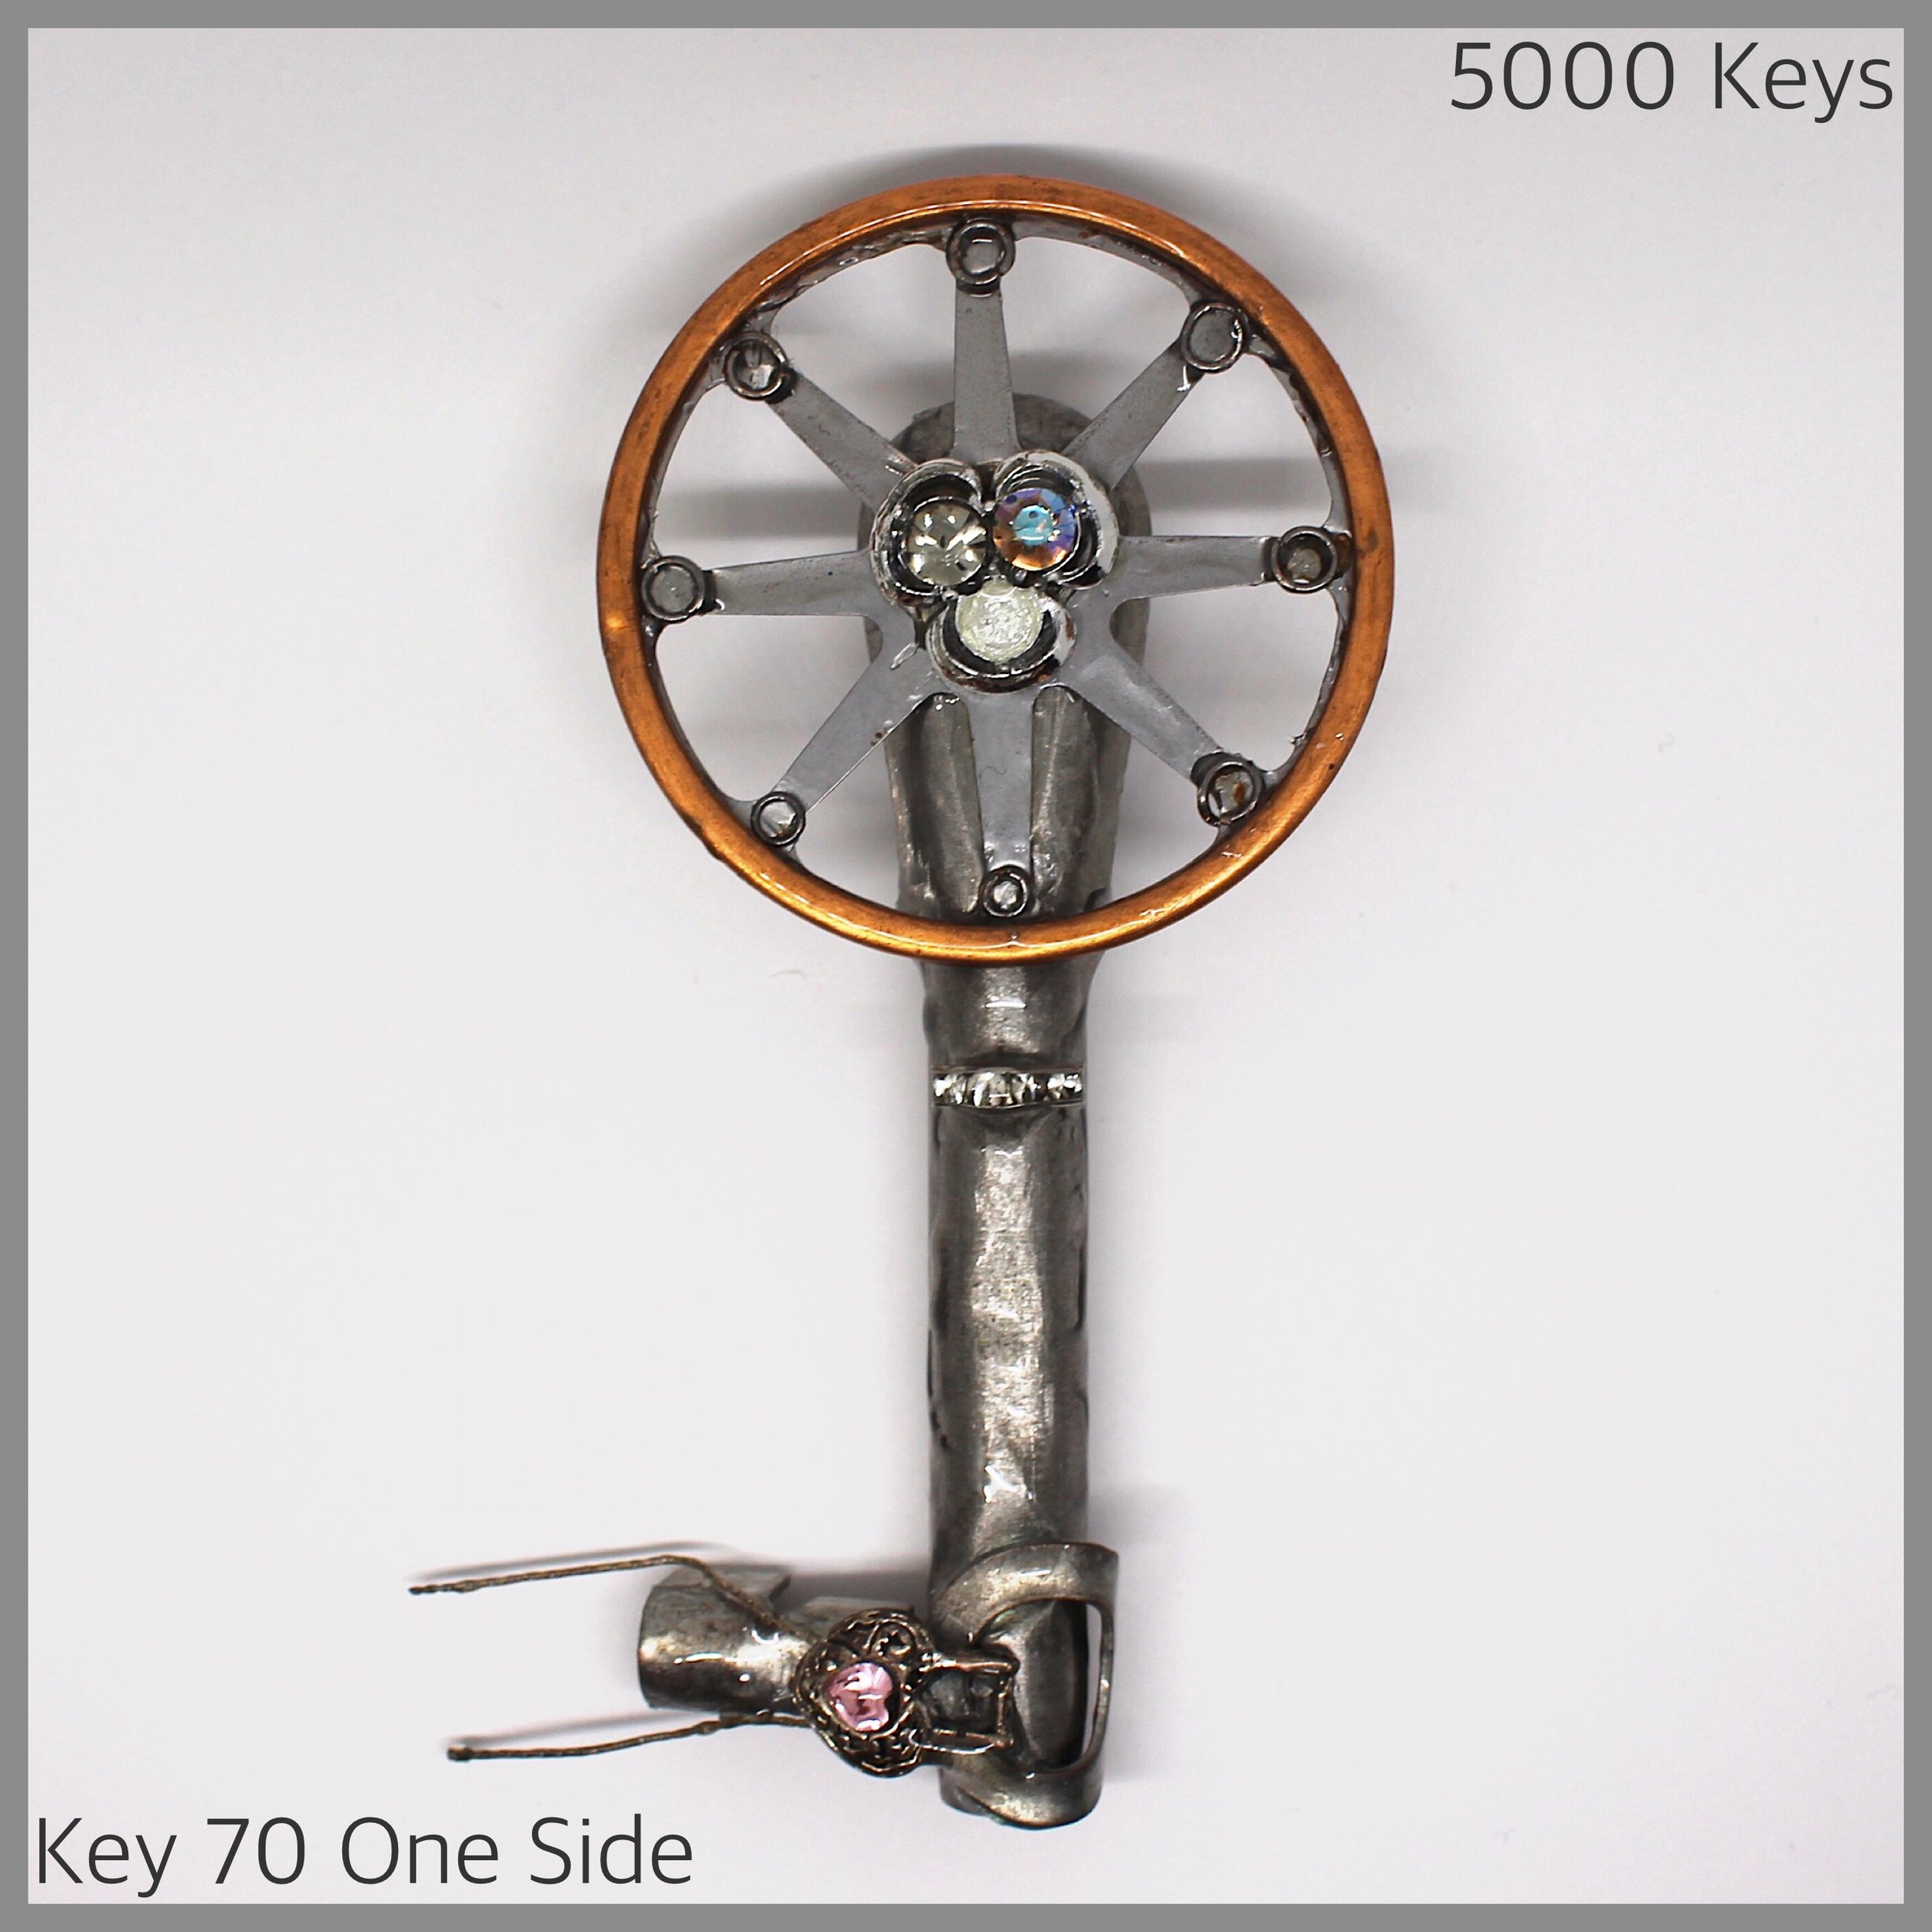 Key 70 one side - 1.JPG